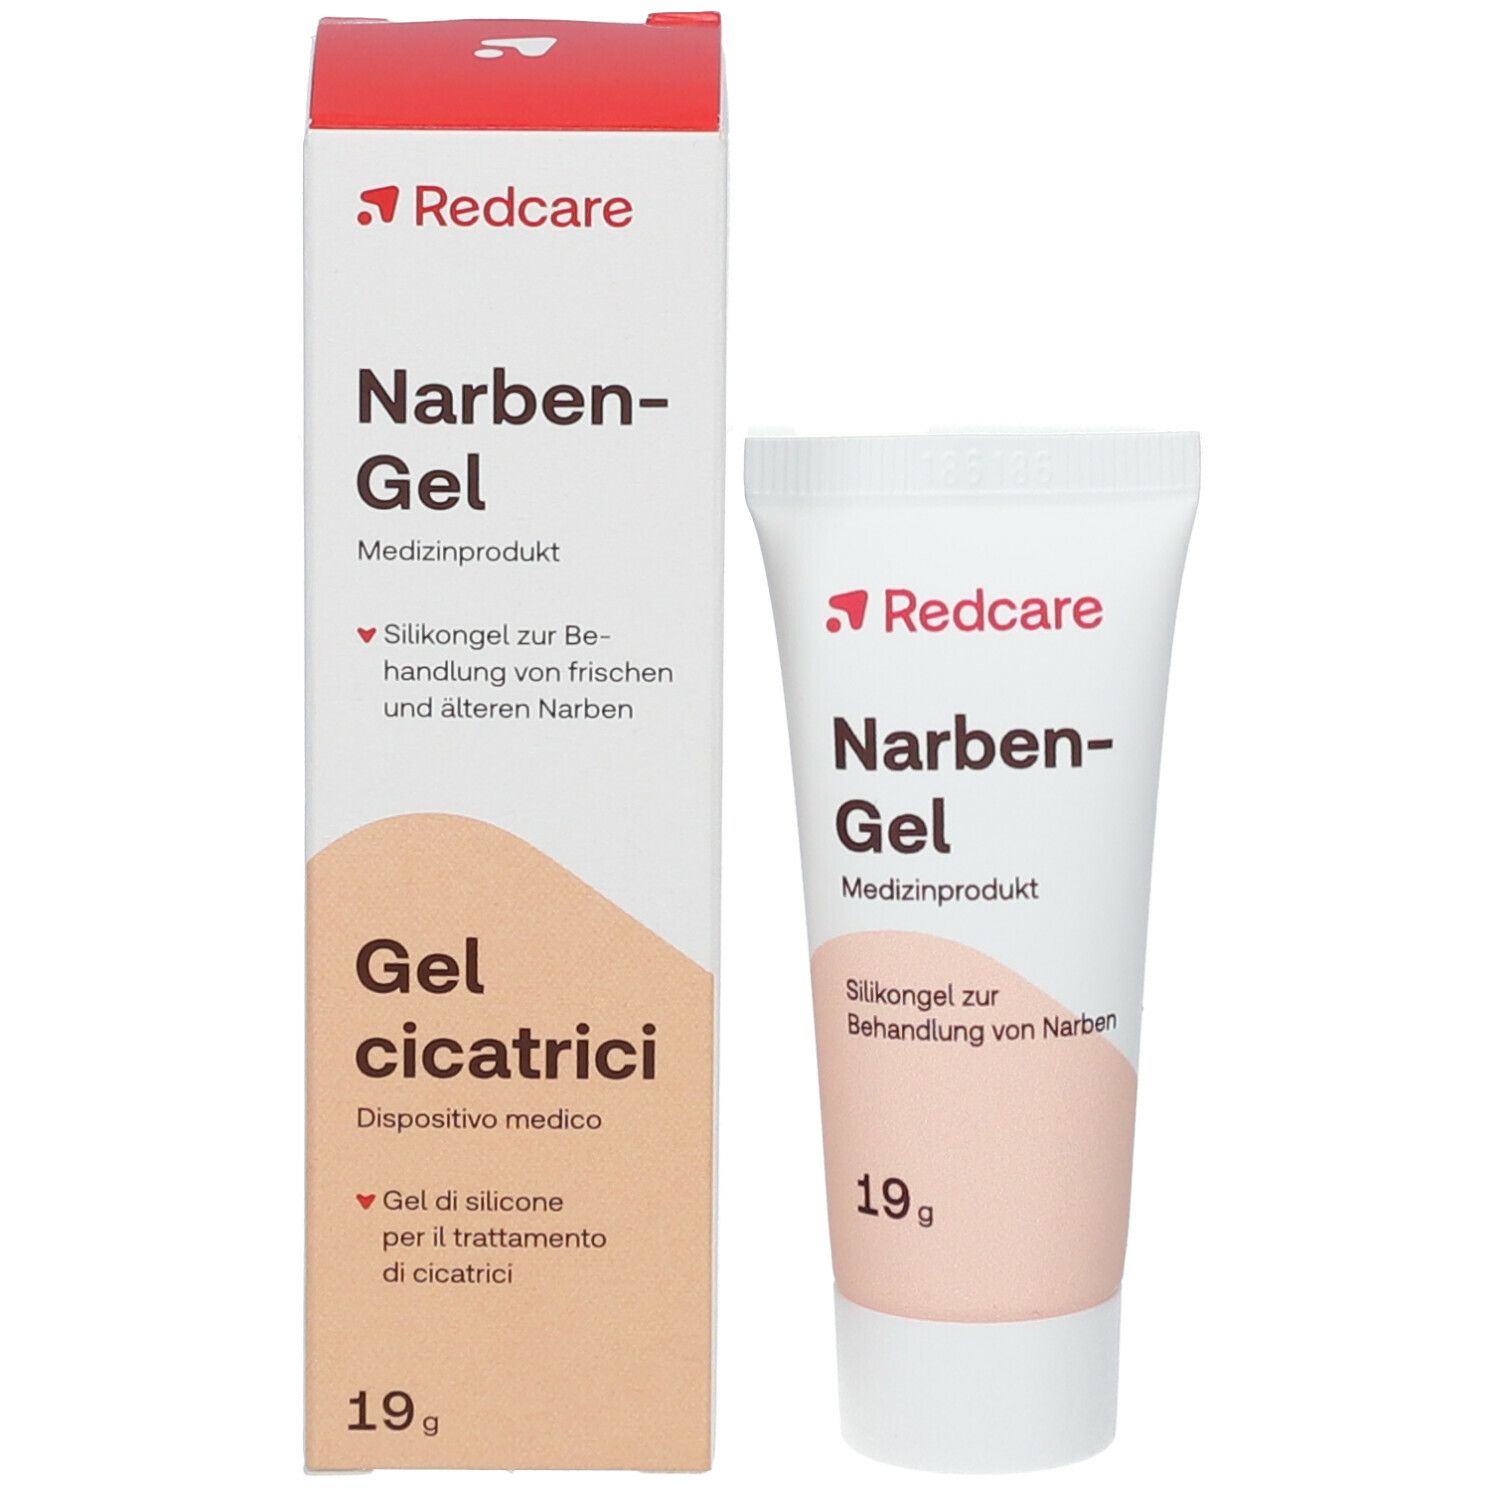 Redcare Narben-Gel